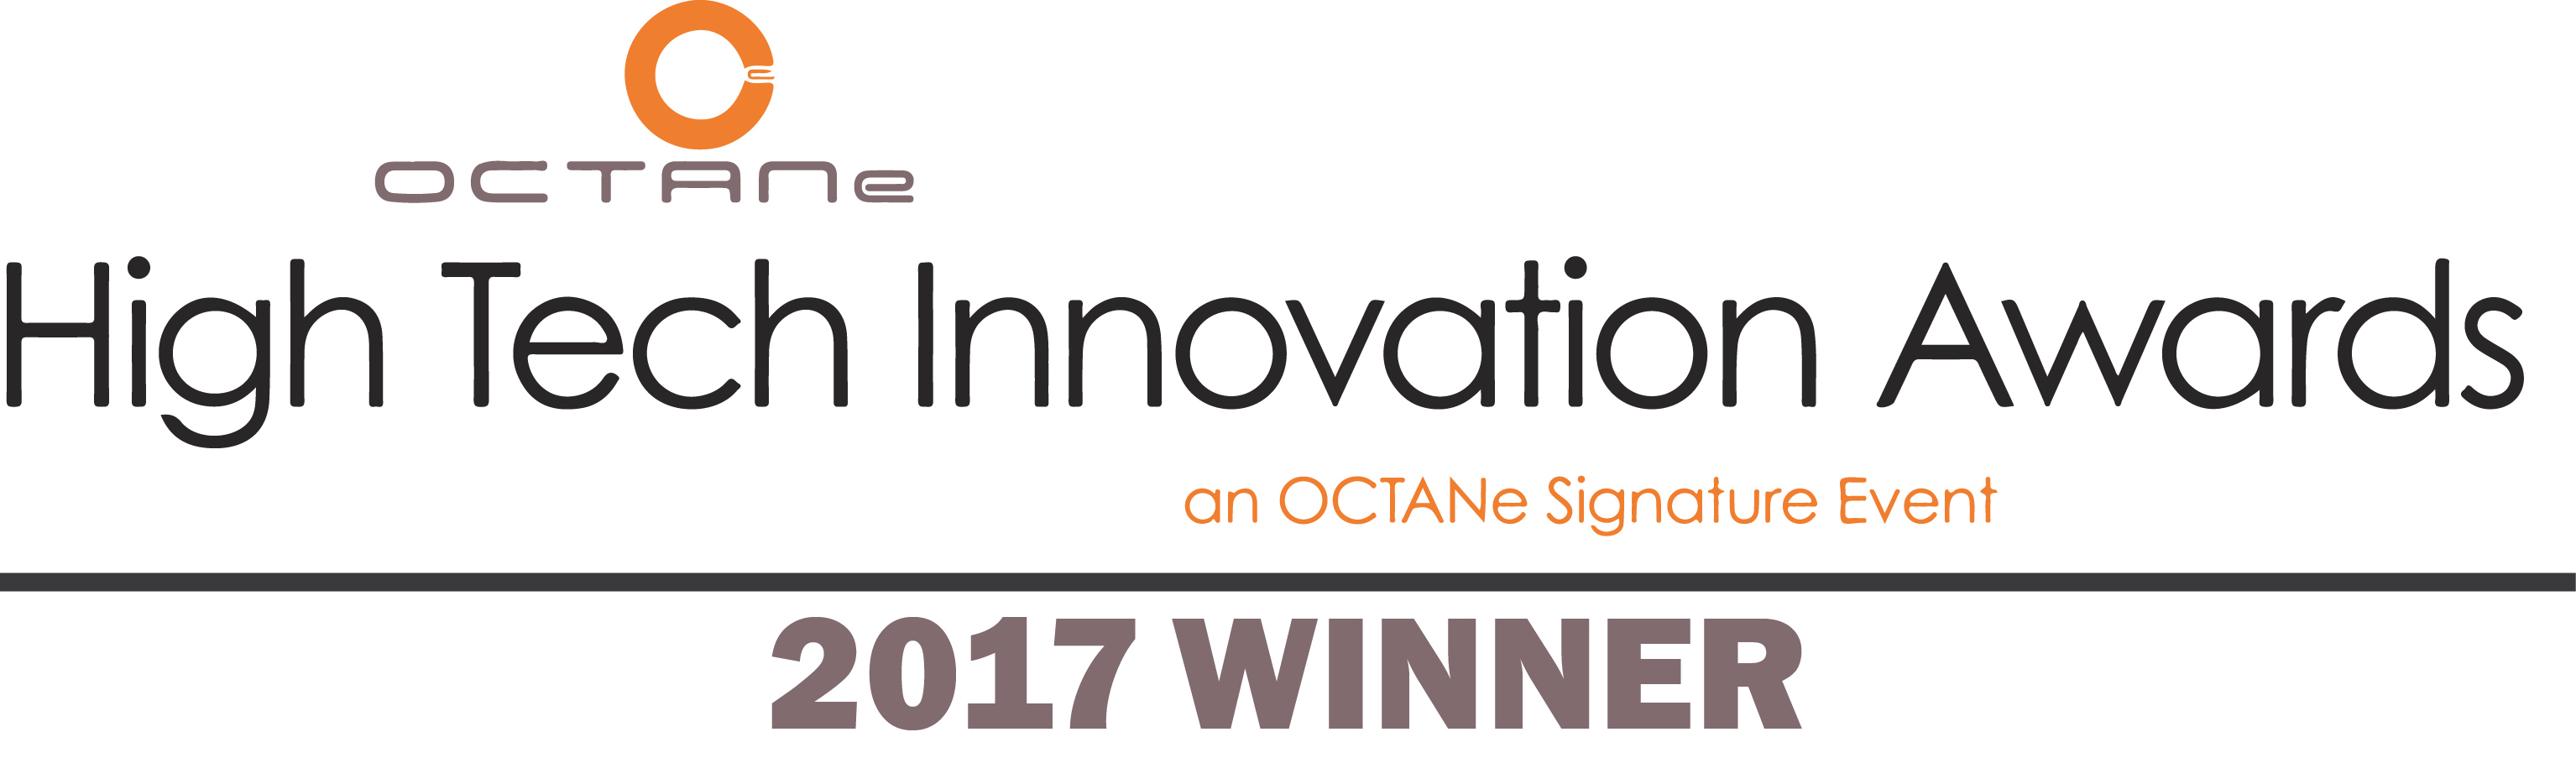 OCTANe High Tech Innovation Awards